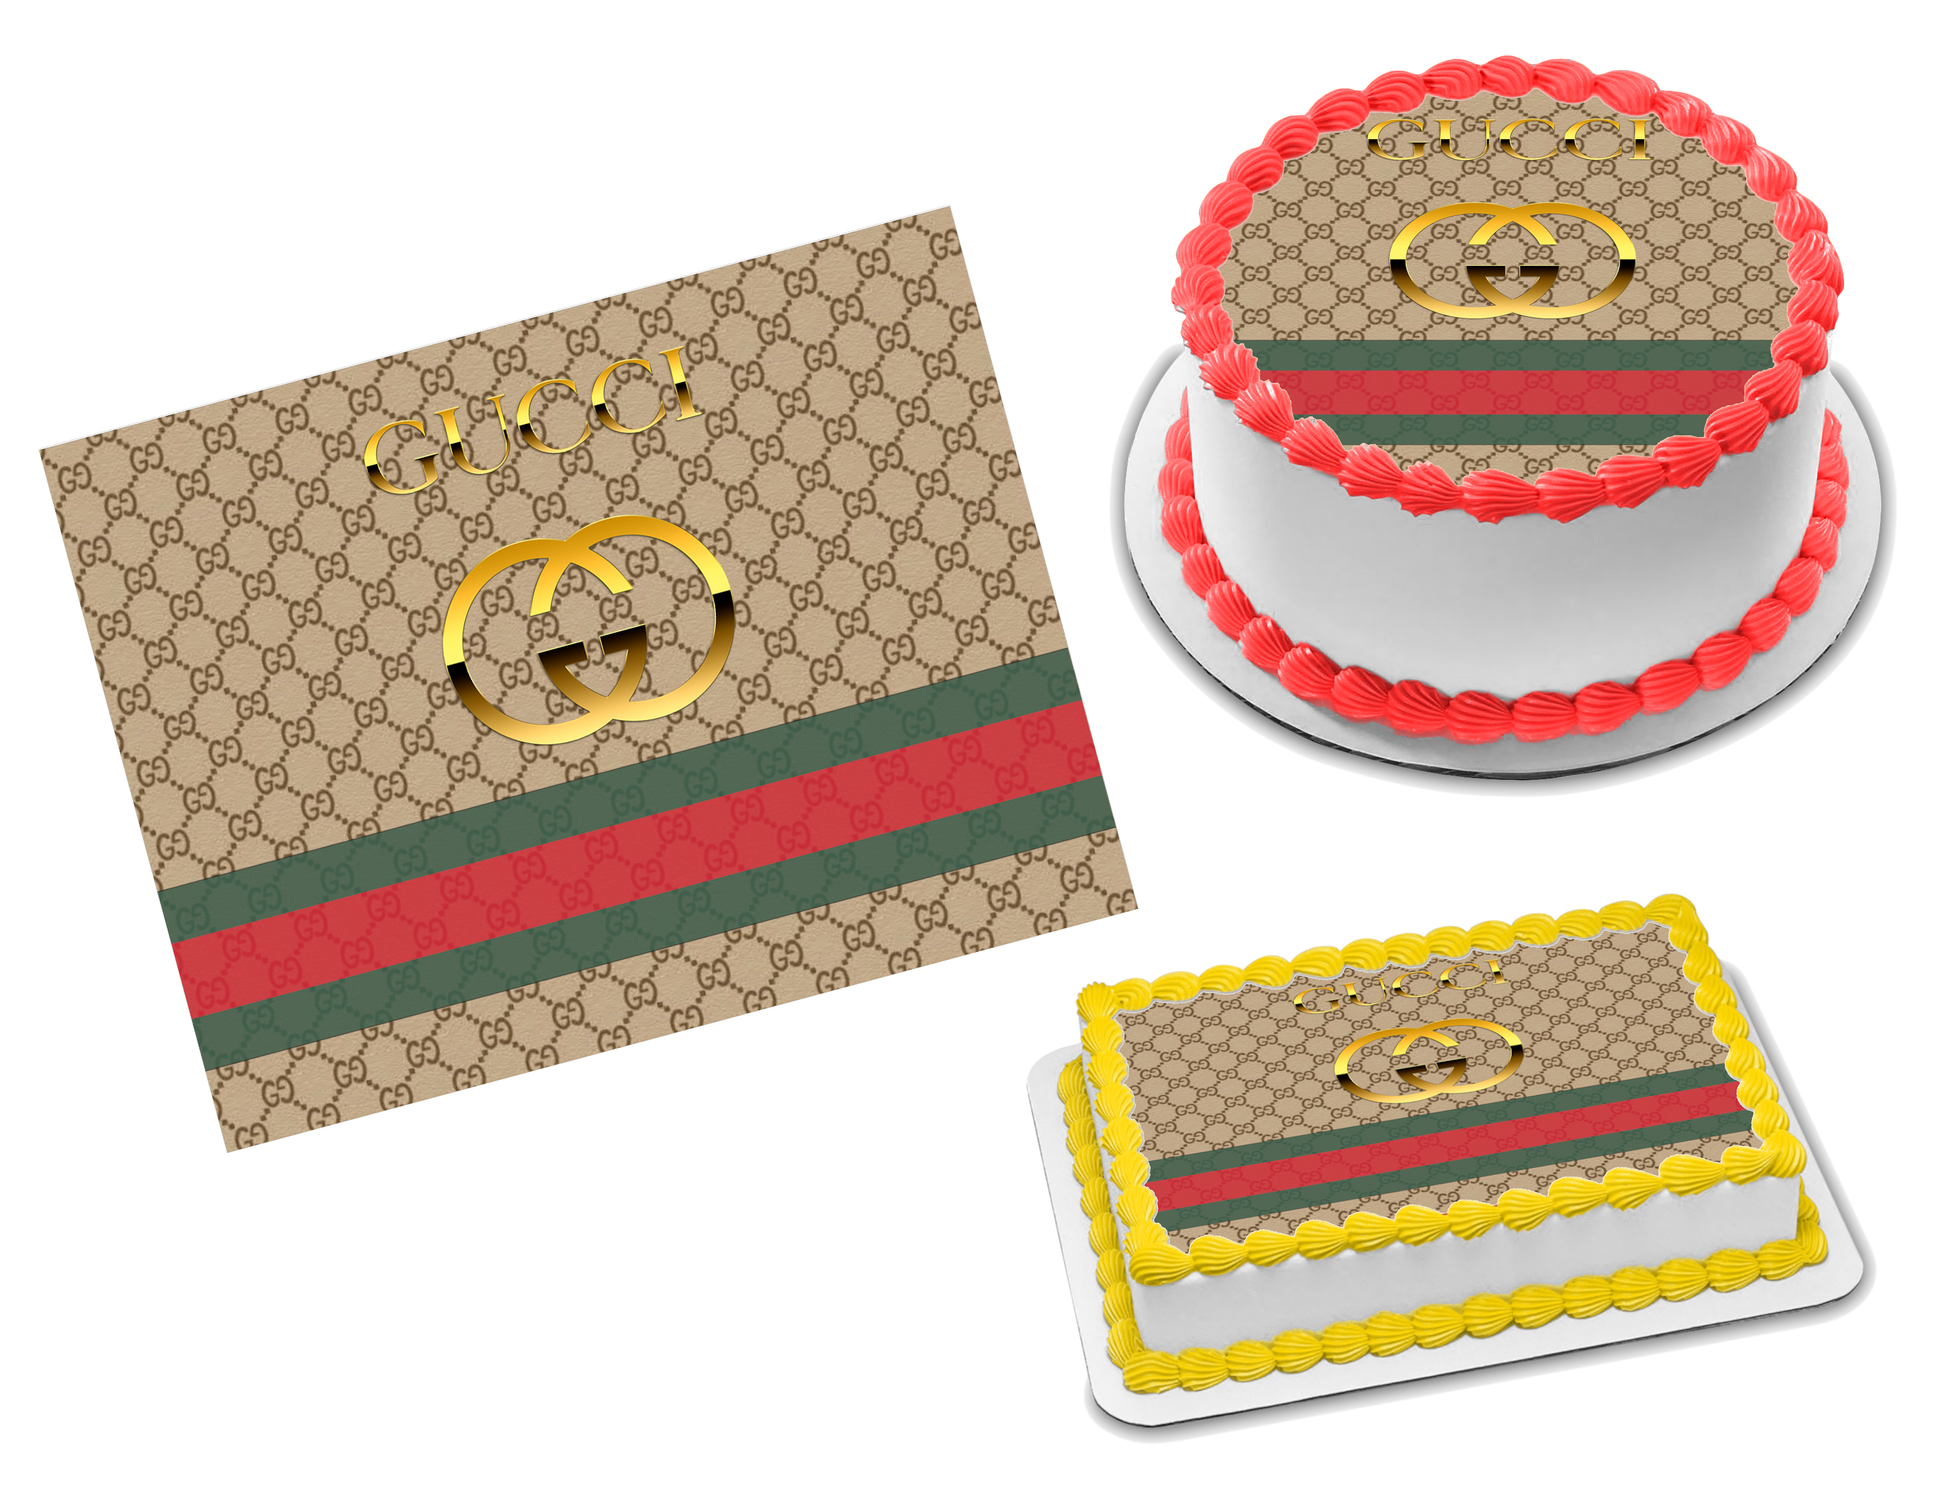 Designer Cupcakes  Custom birthday cakes, Gucci cake, Cupcake